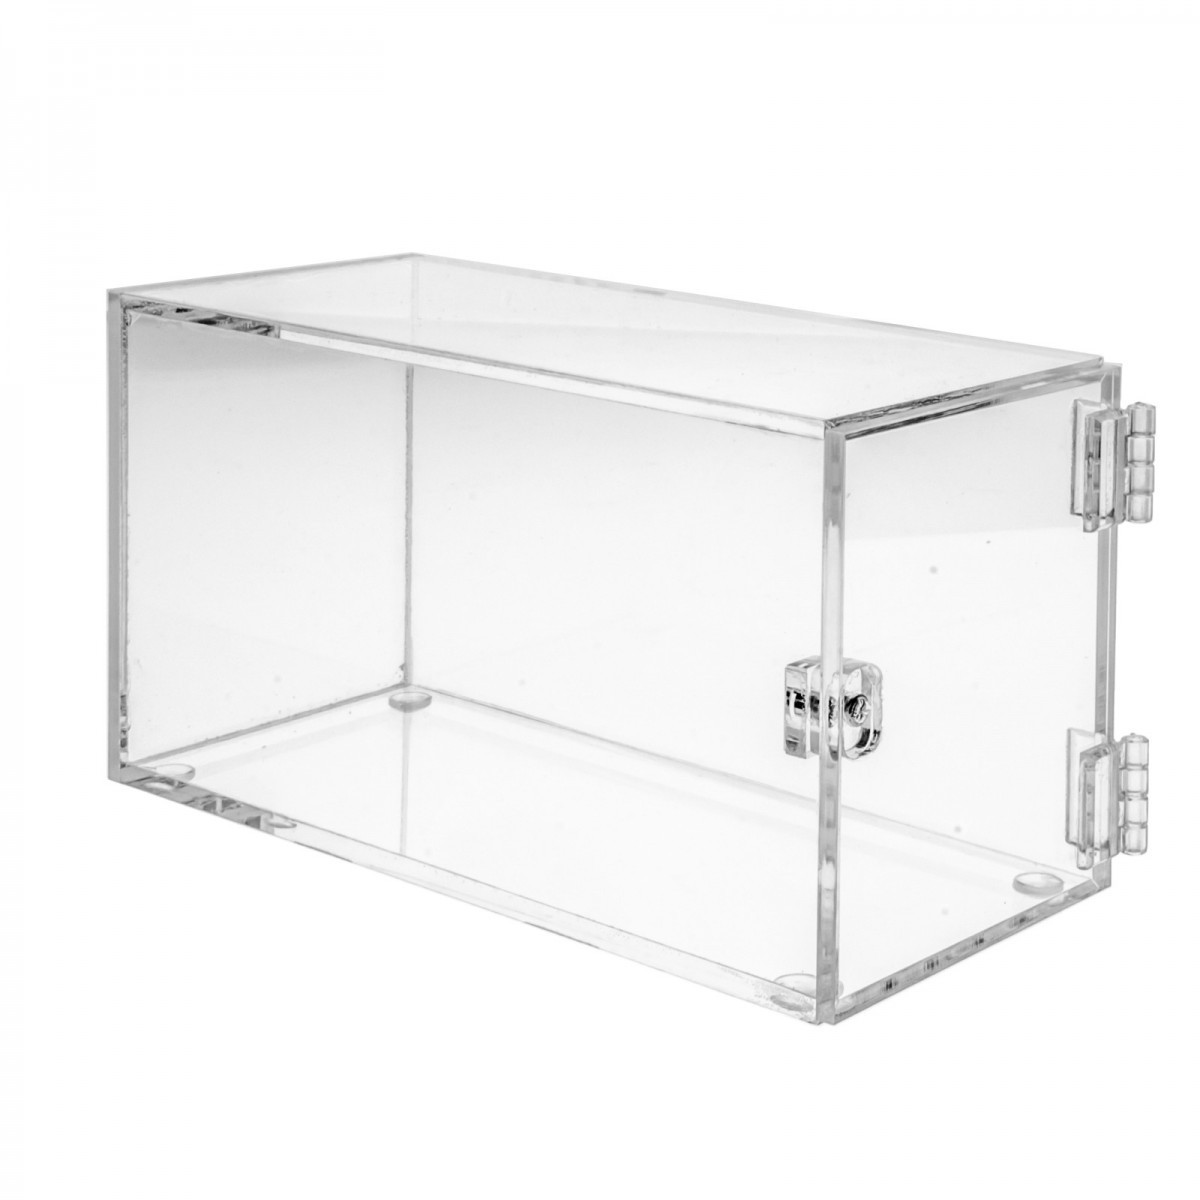 Clear Acrylic display case